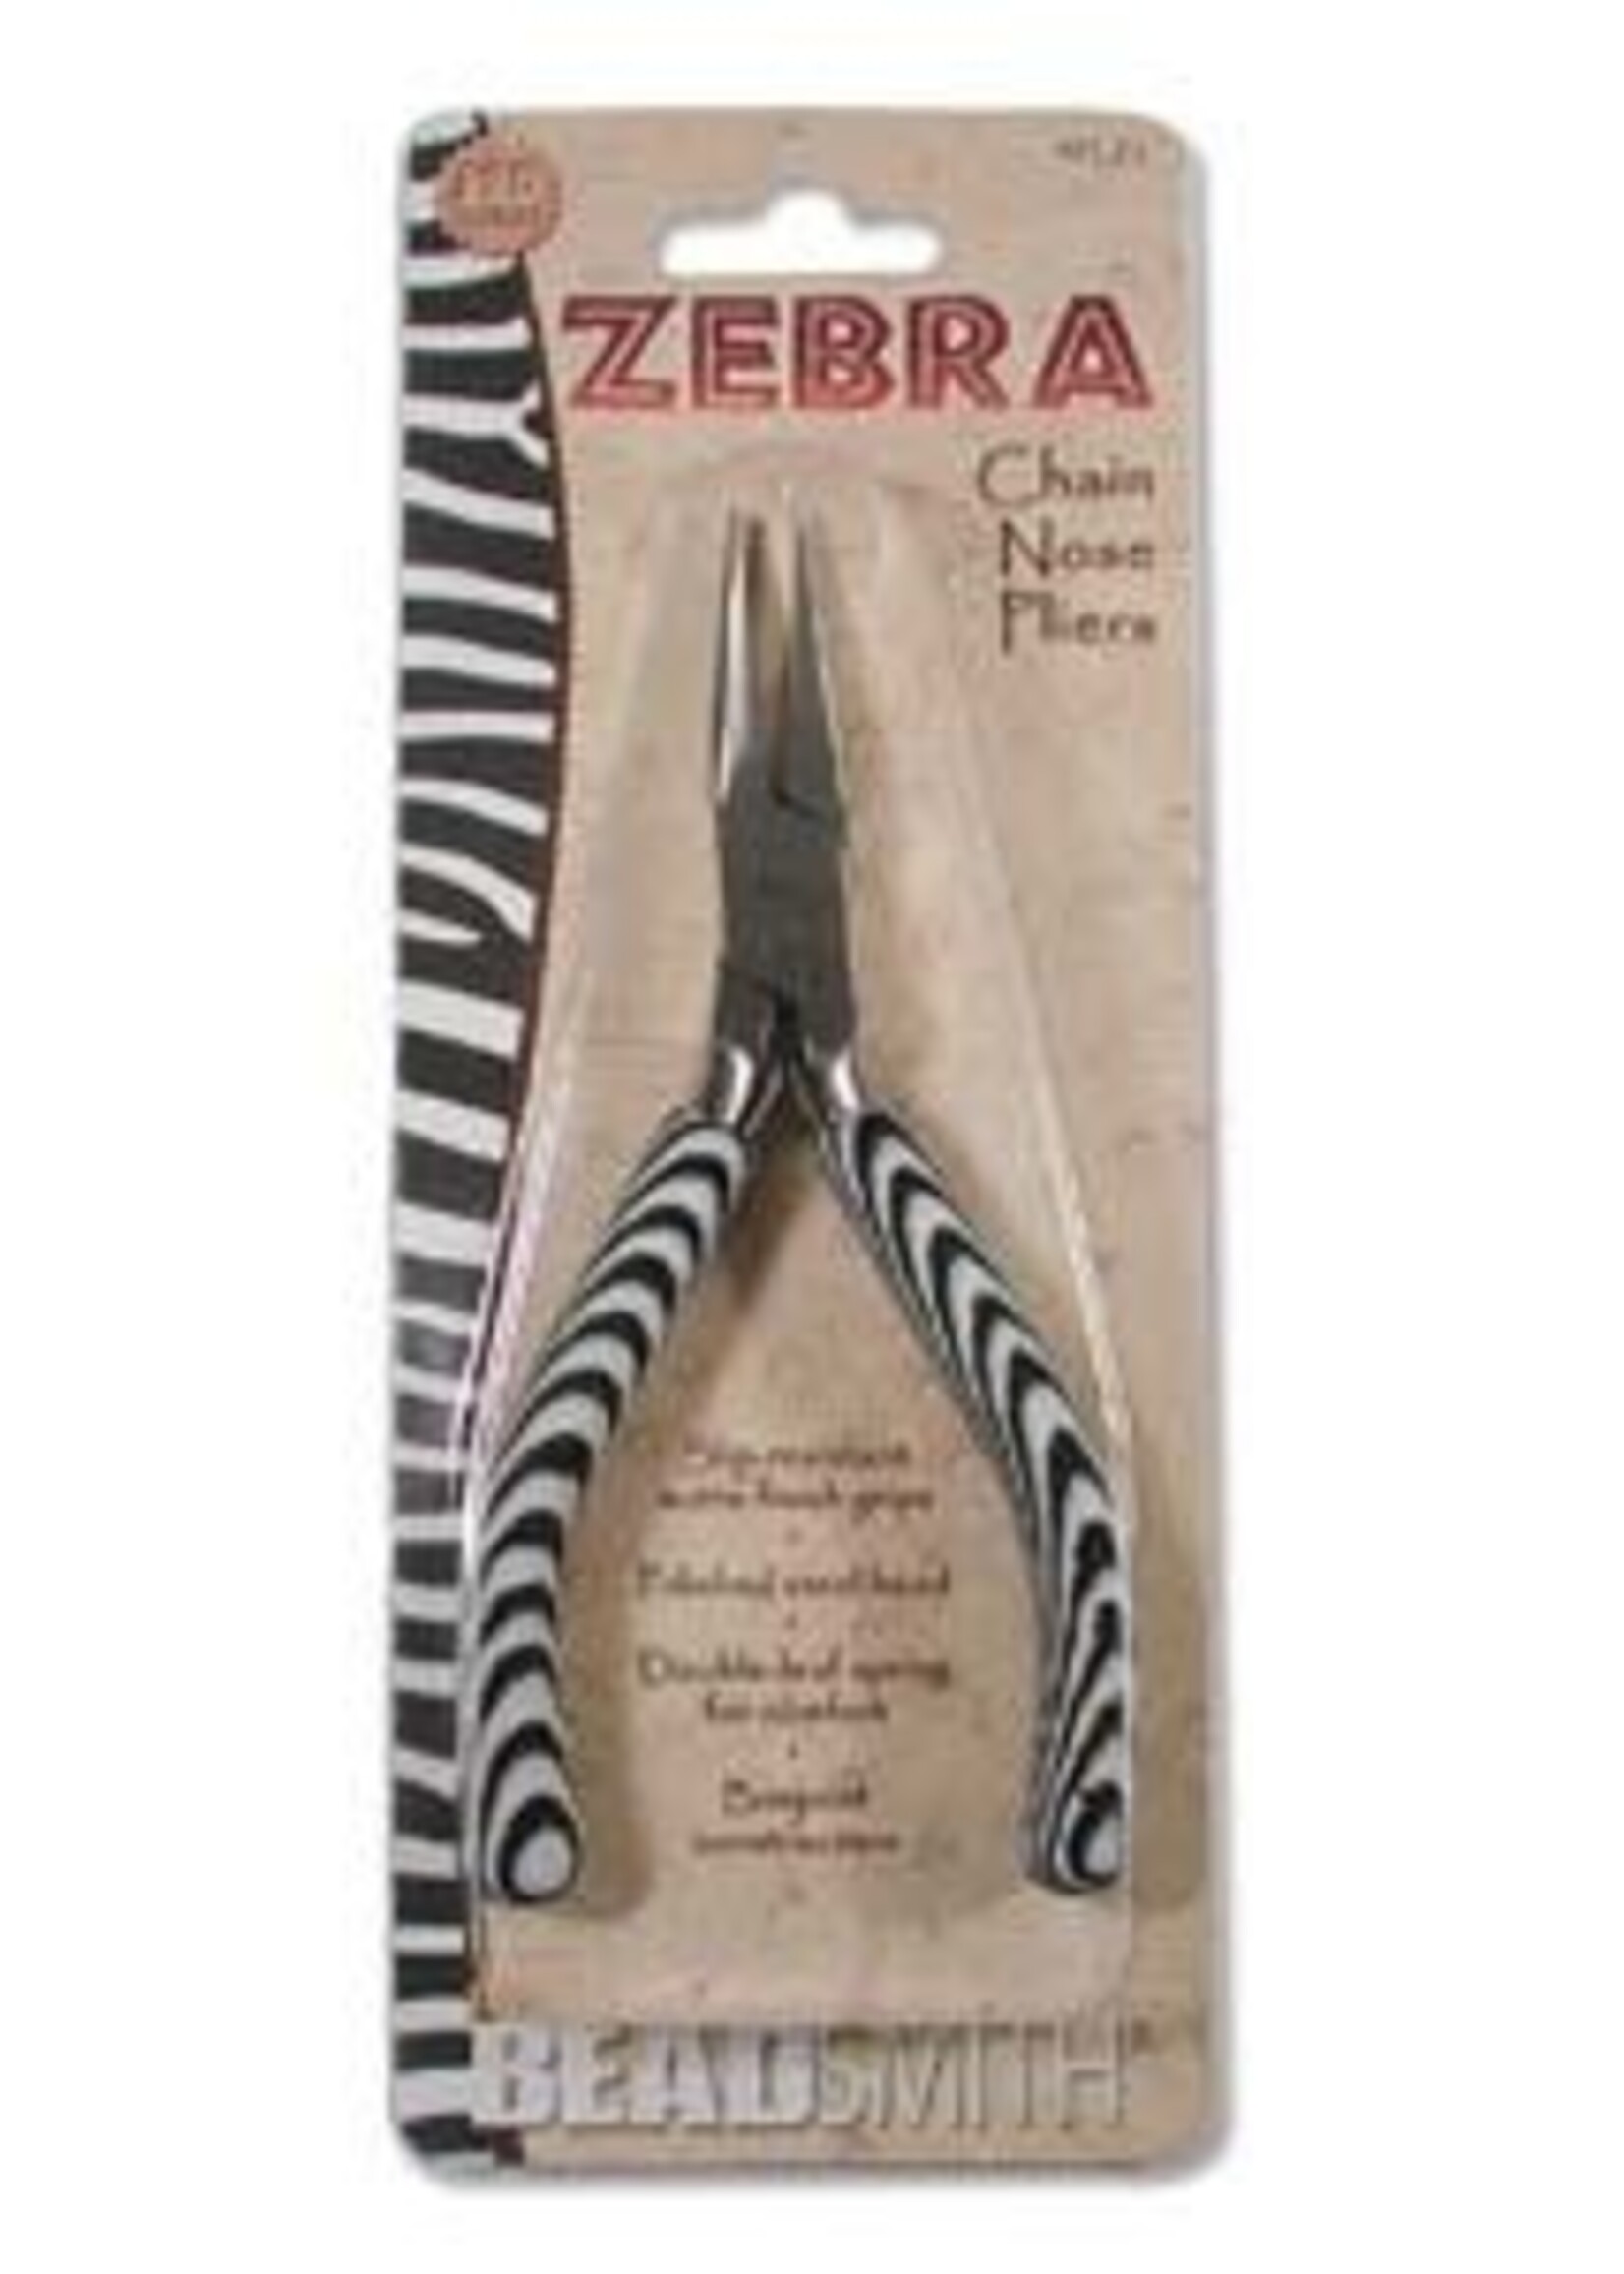 Zebra Chain Nose Pliers